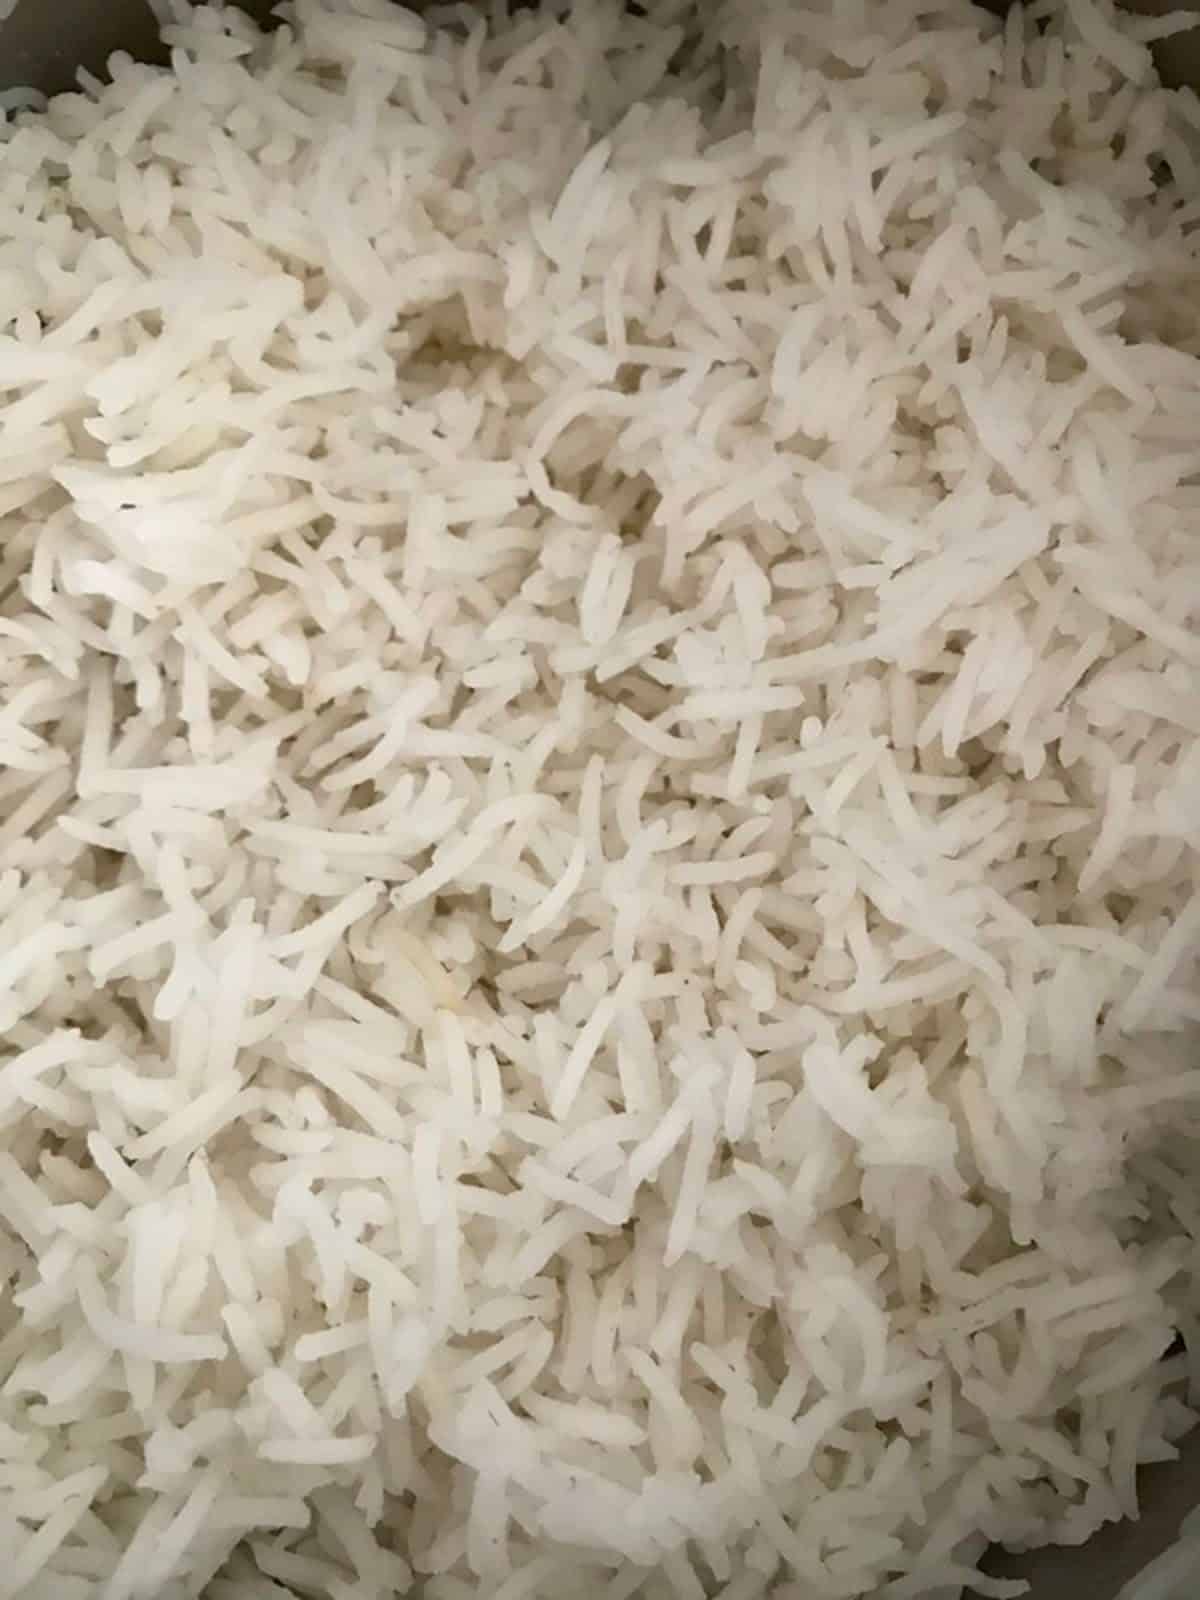 Cooked basmati rice.